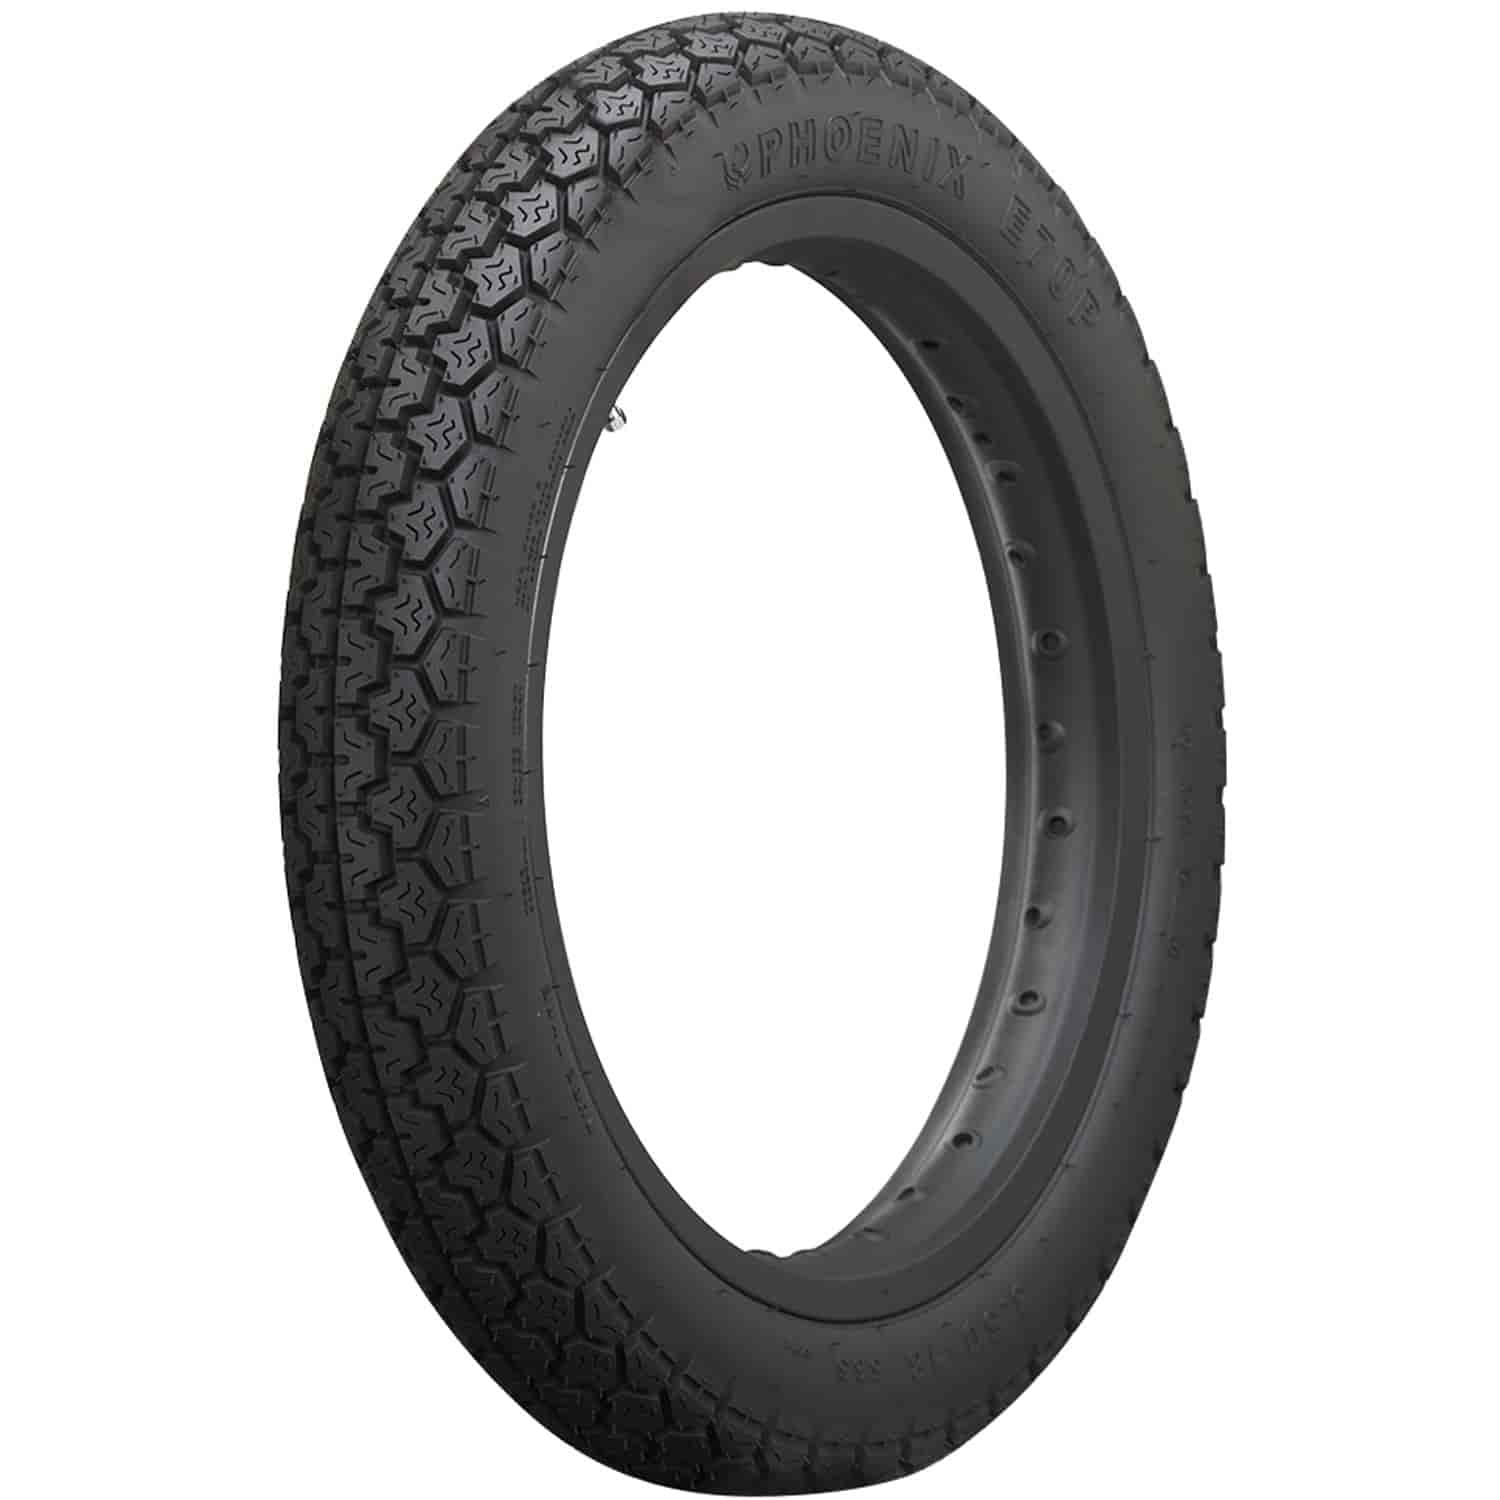 Phoenix E81P Motorcycle Tire: 410-18